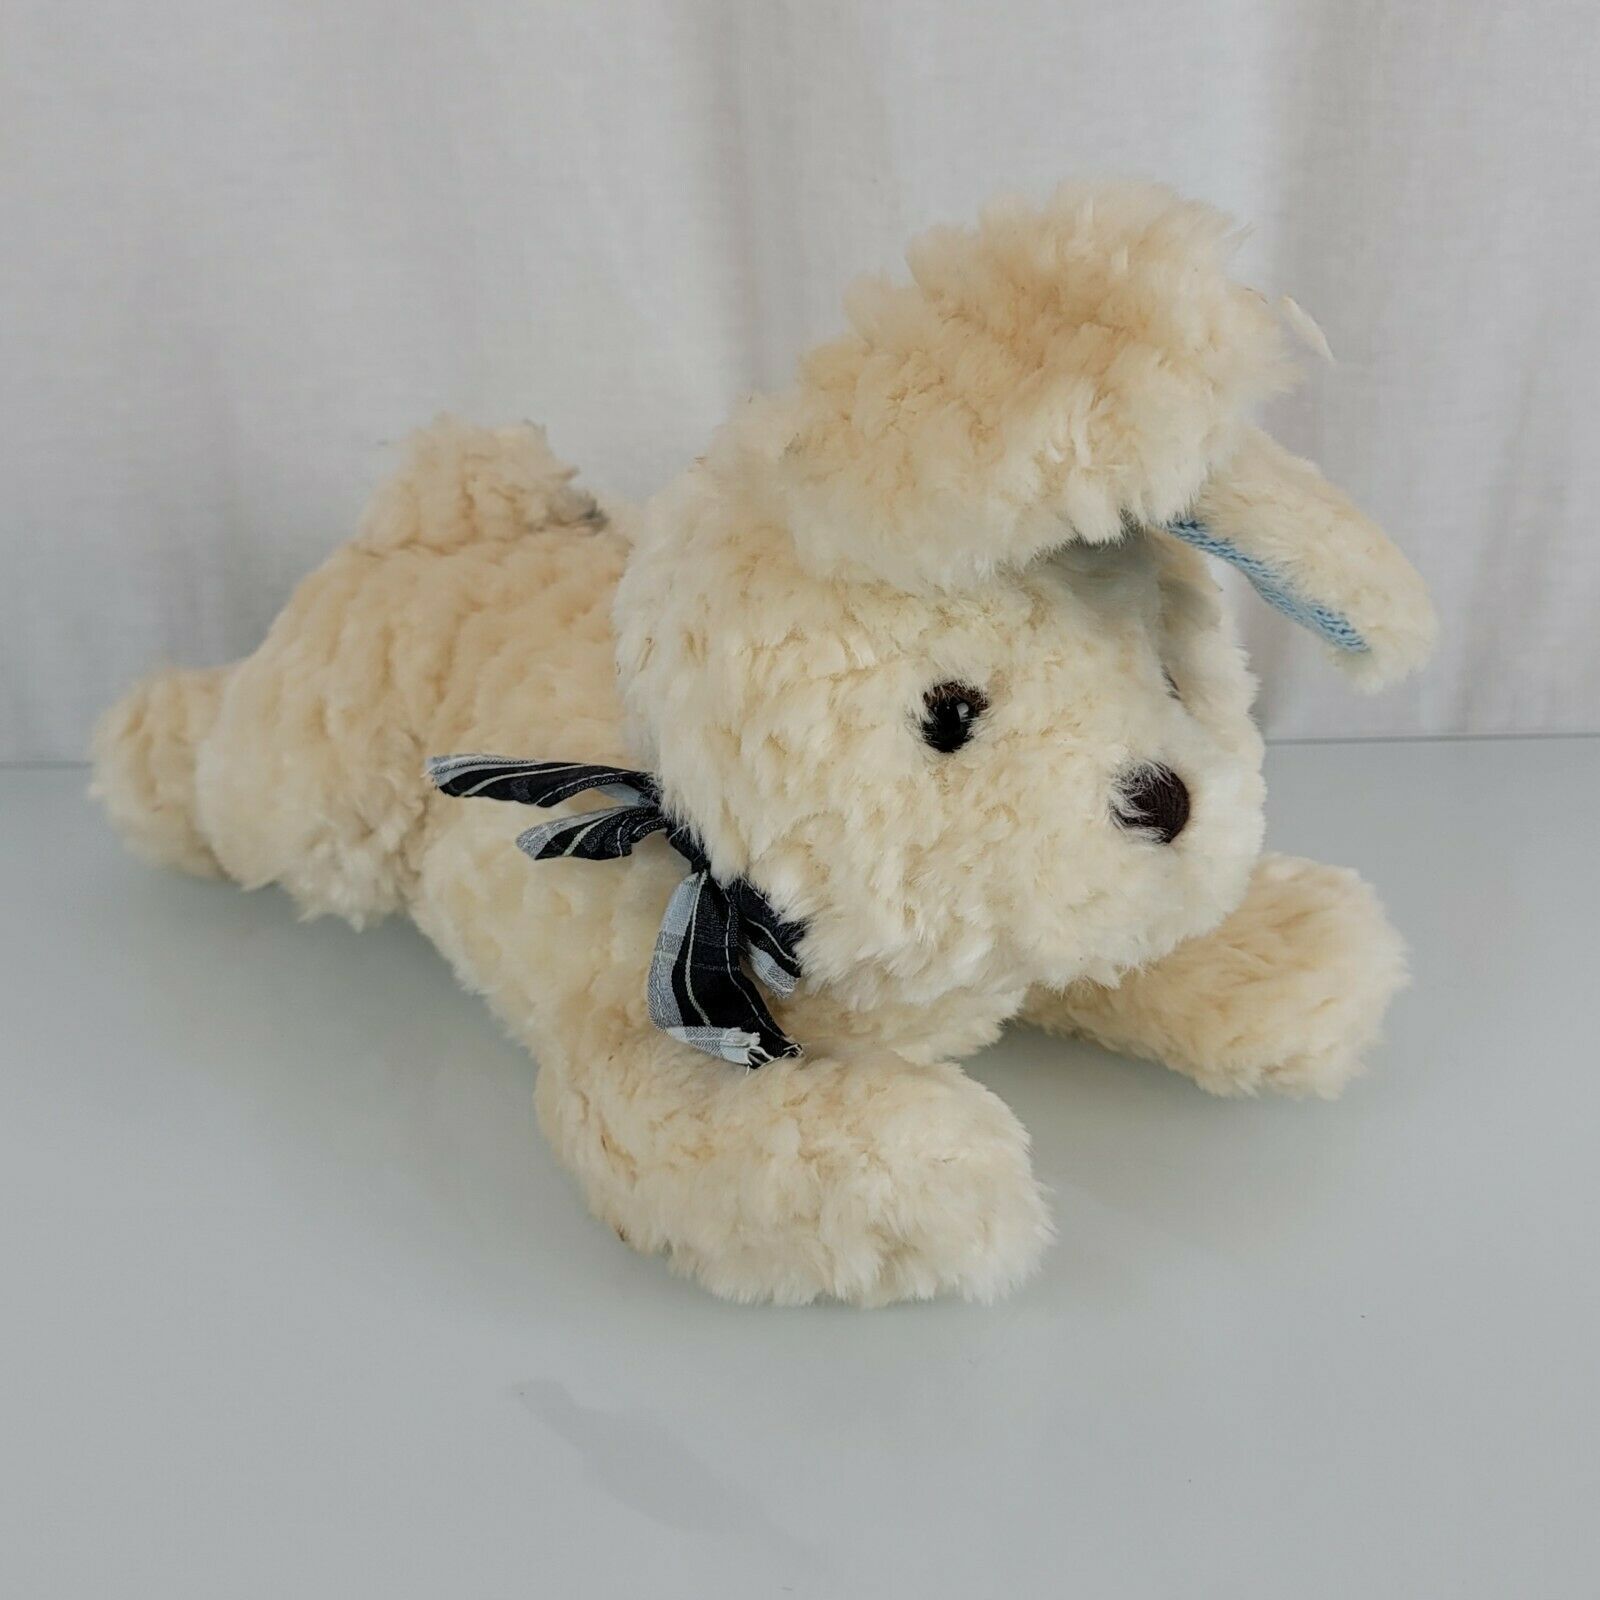 Gymboree Plush Bunny Rabbit Cream White Soft Toy Blue Feet Ears 2004 Plaid Bow - $24.74